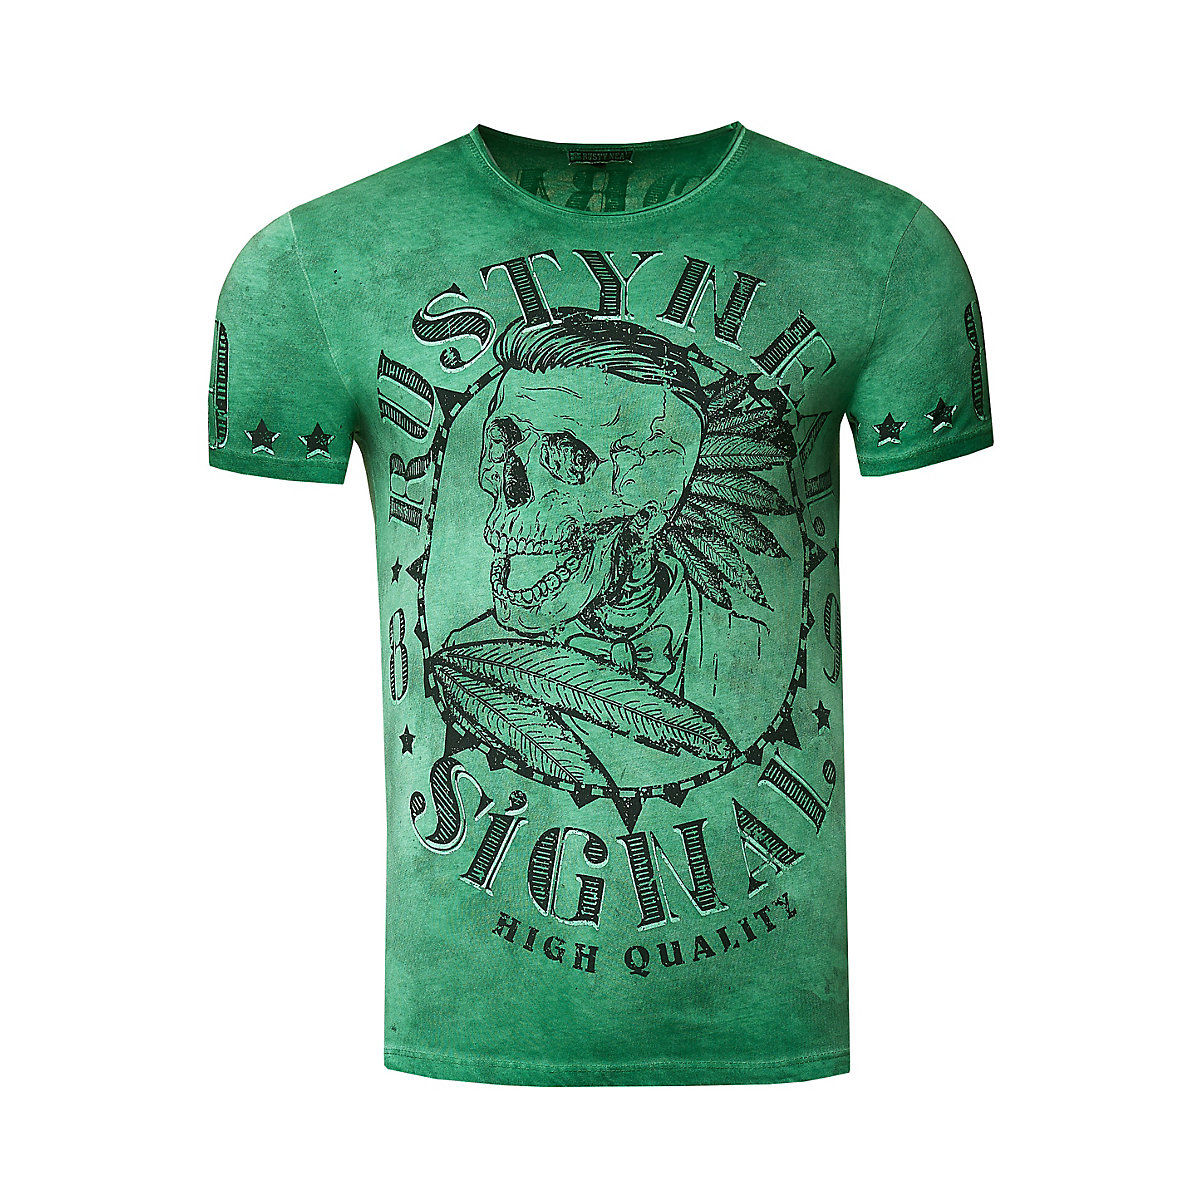 RUSTY NEAL T-Shirt grün